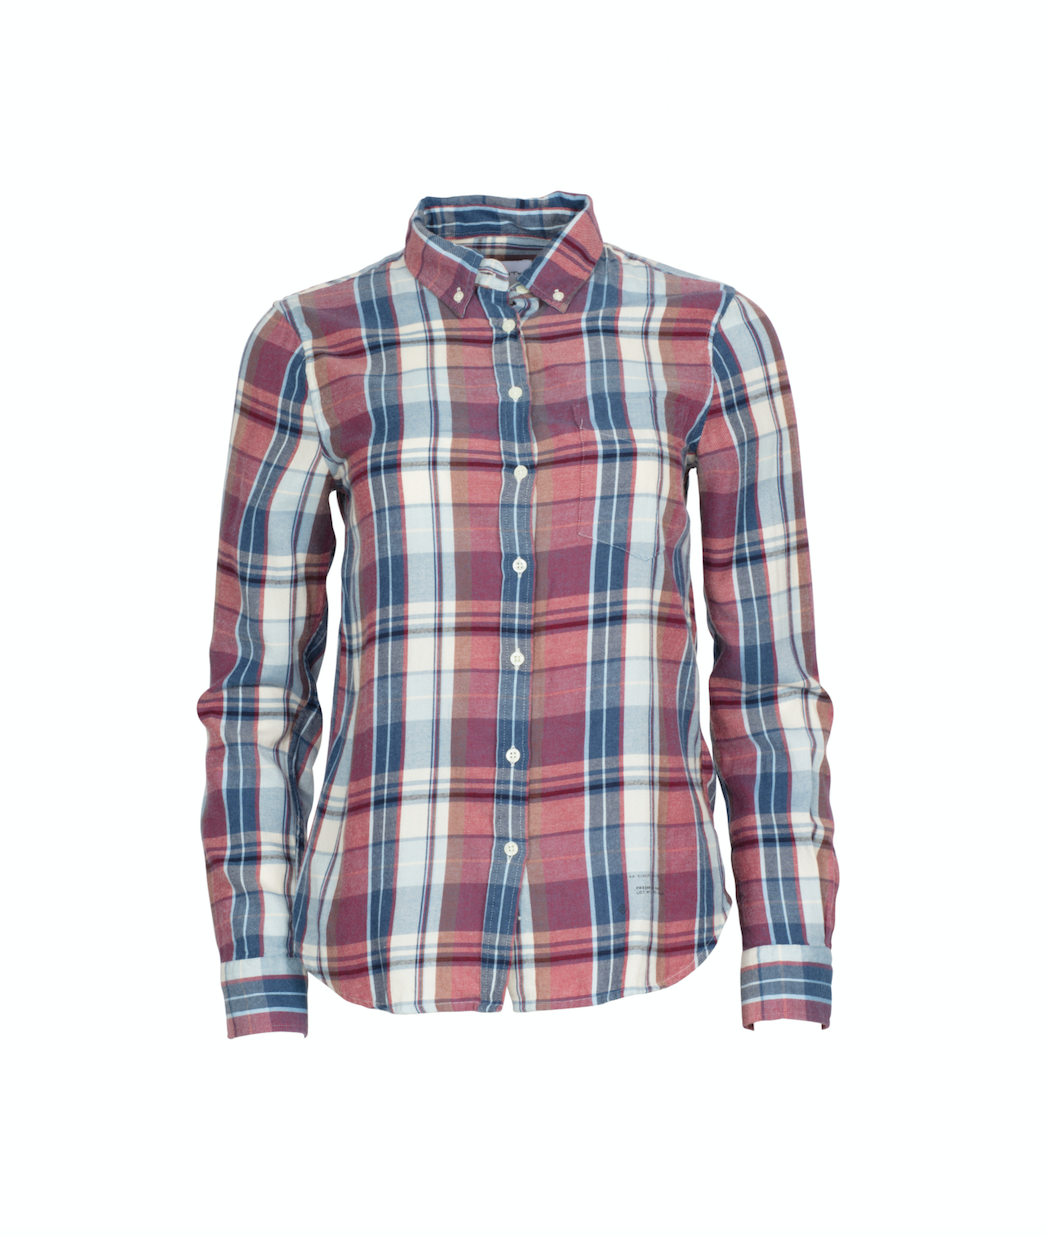 Gant Winter Flannel Madras Shirt - Smoked Paprika S - 2nd Hand Villoid - 2nd Hand Topper - VILLOID.no